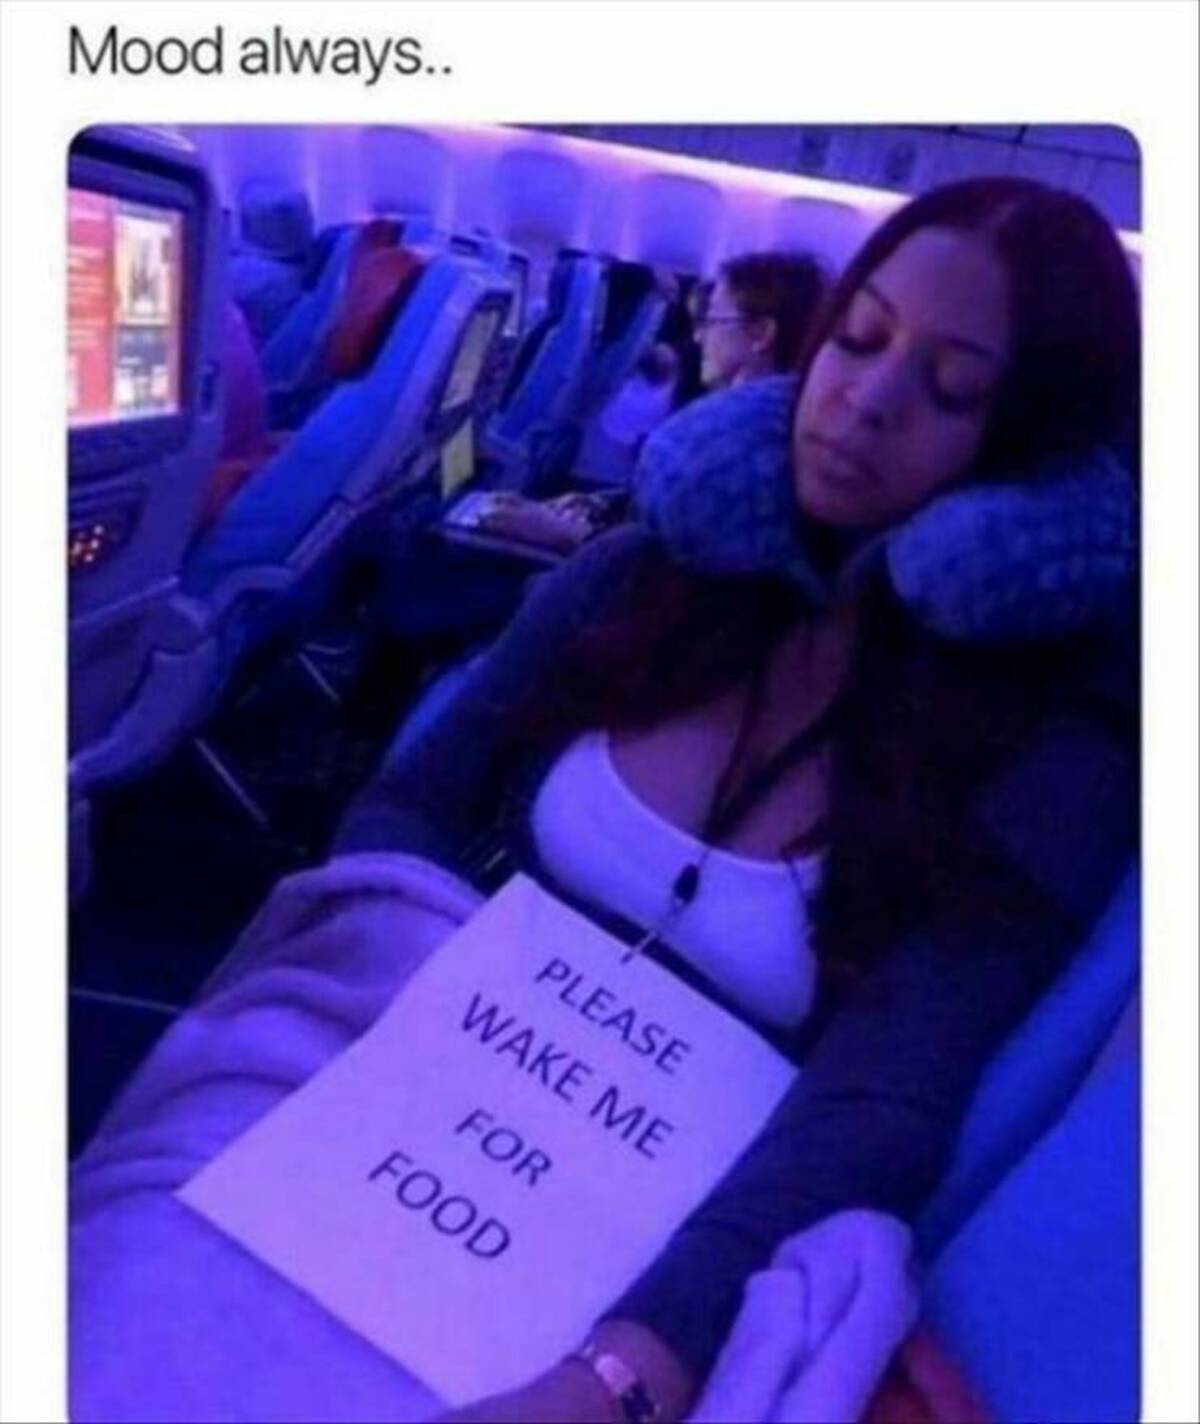 passenger - Mood always.. Please Wake Me For Food